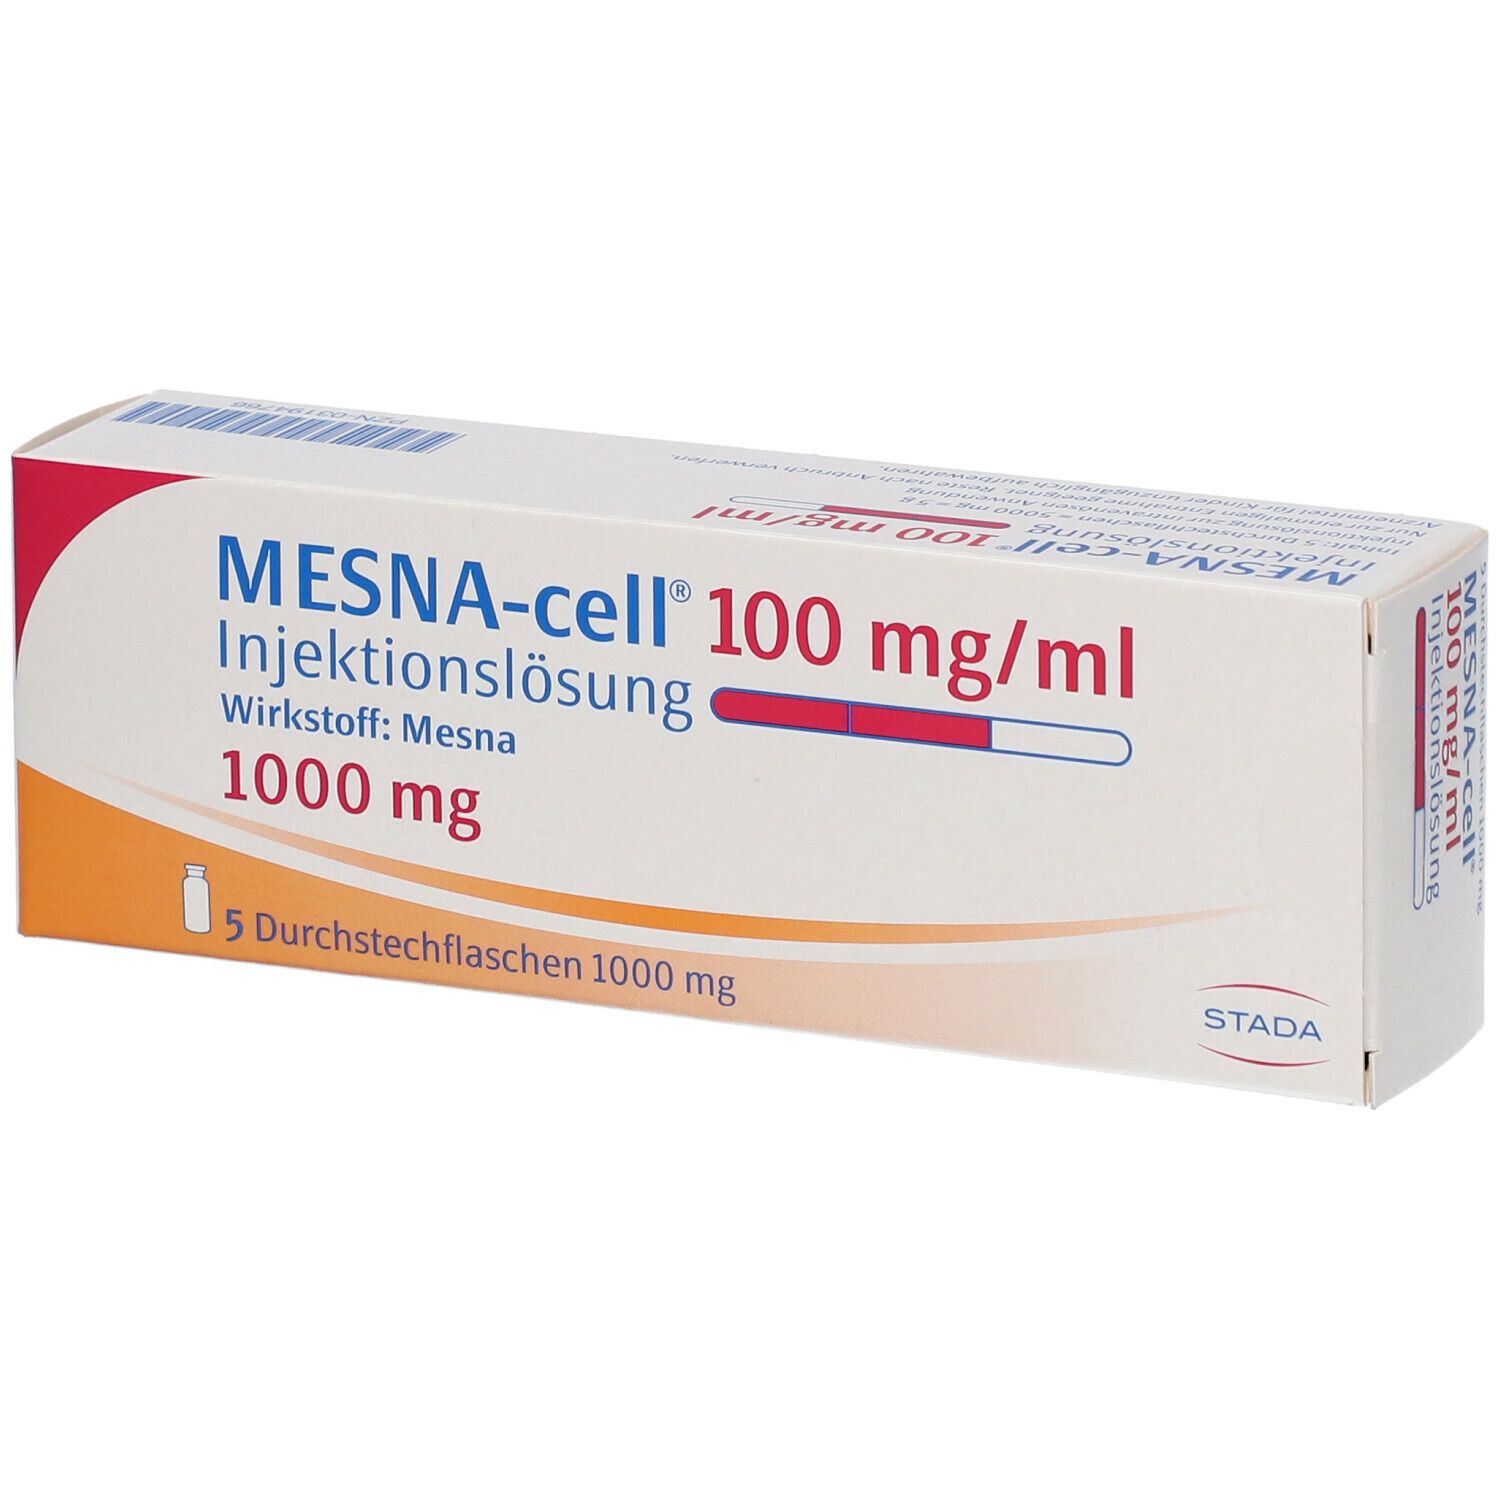 MESNA-cell® 100 mg/ml 1000 mg